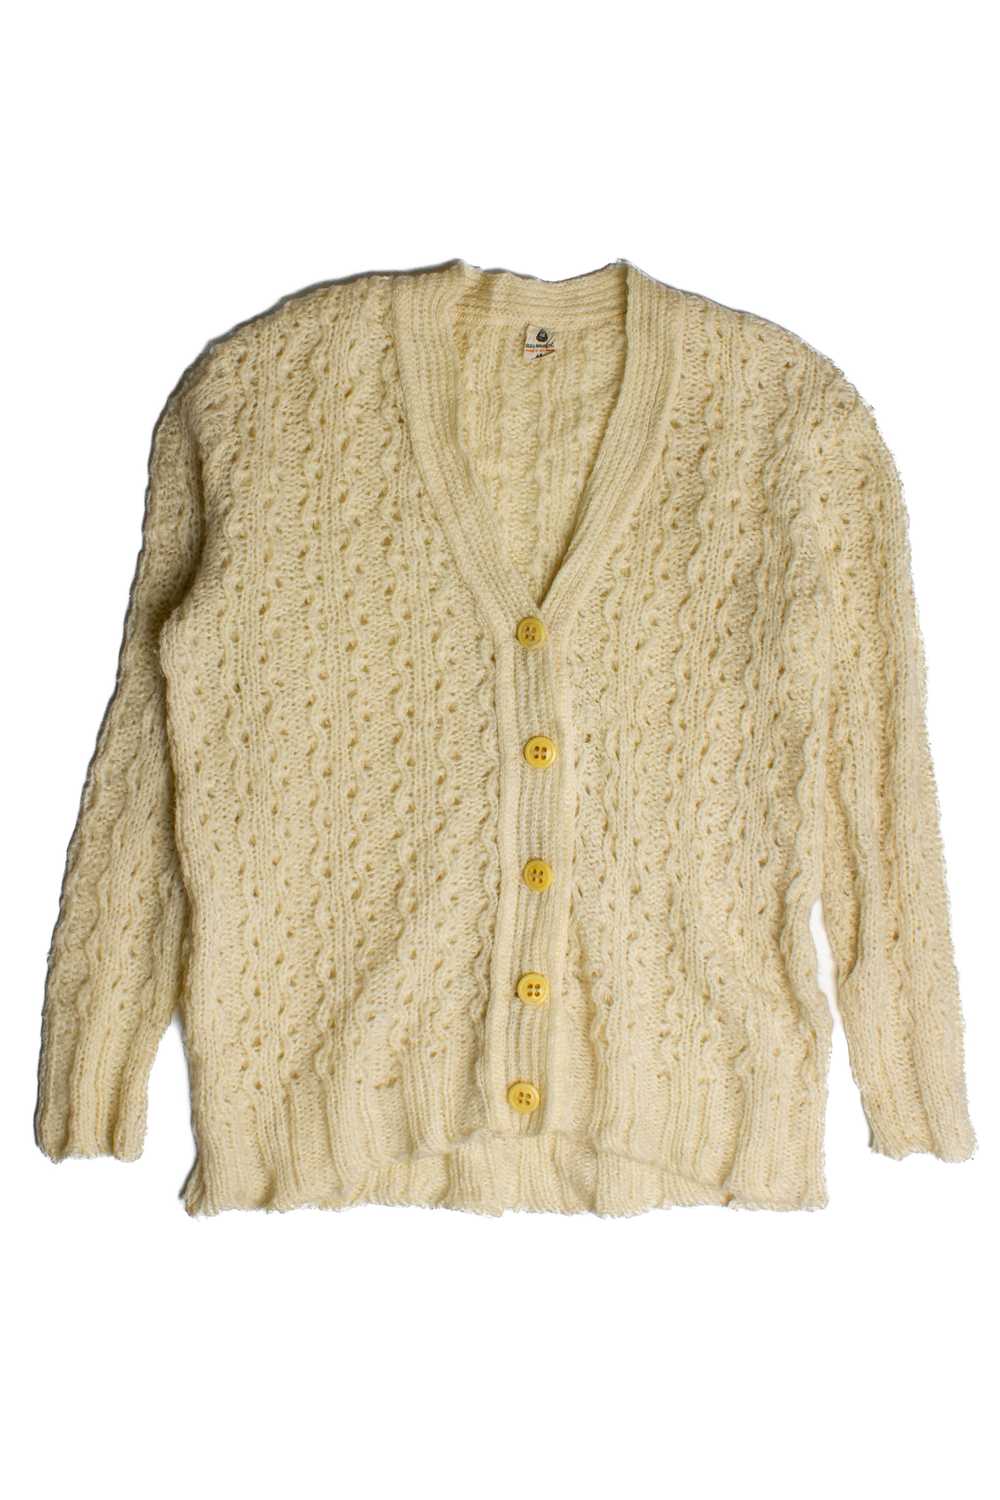 Vintage Olga Milosevic Vintage Fisherman Sweater (198… - Gem